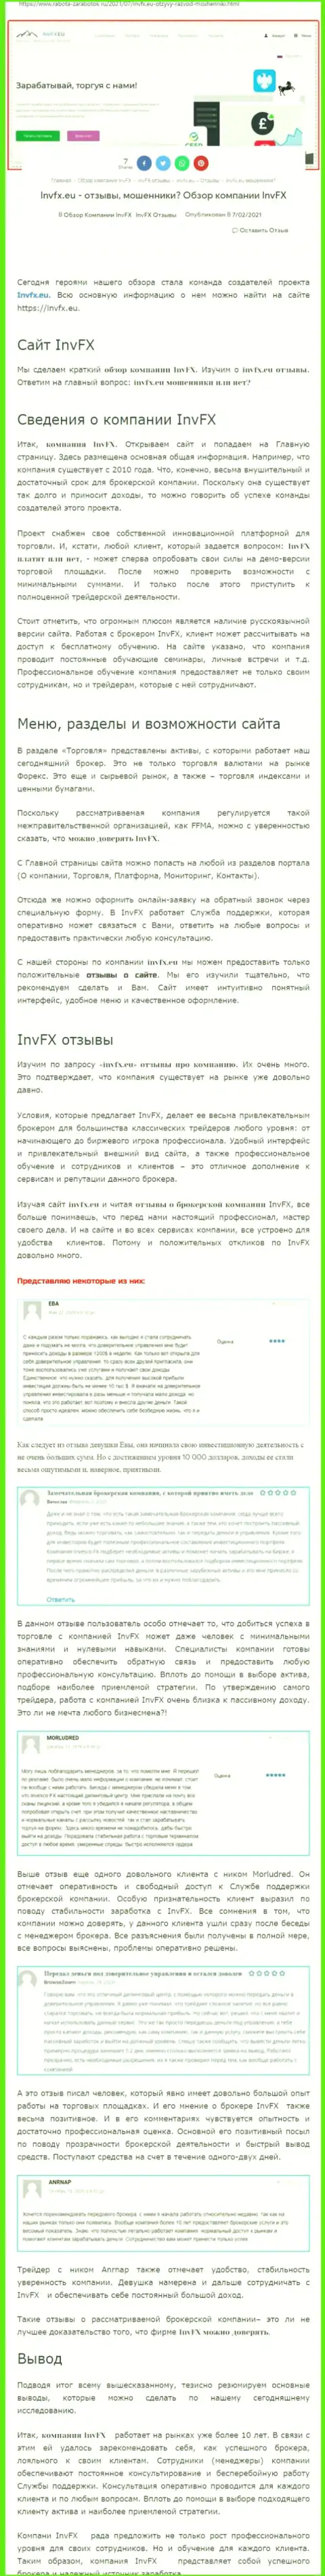 Материал онлайн-сервиса Rabota Zarabotok Ru о форекс дилере Invesco Limited